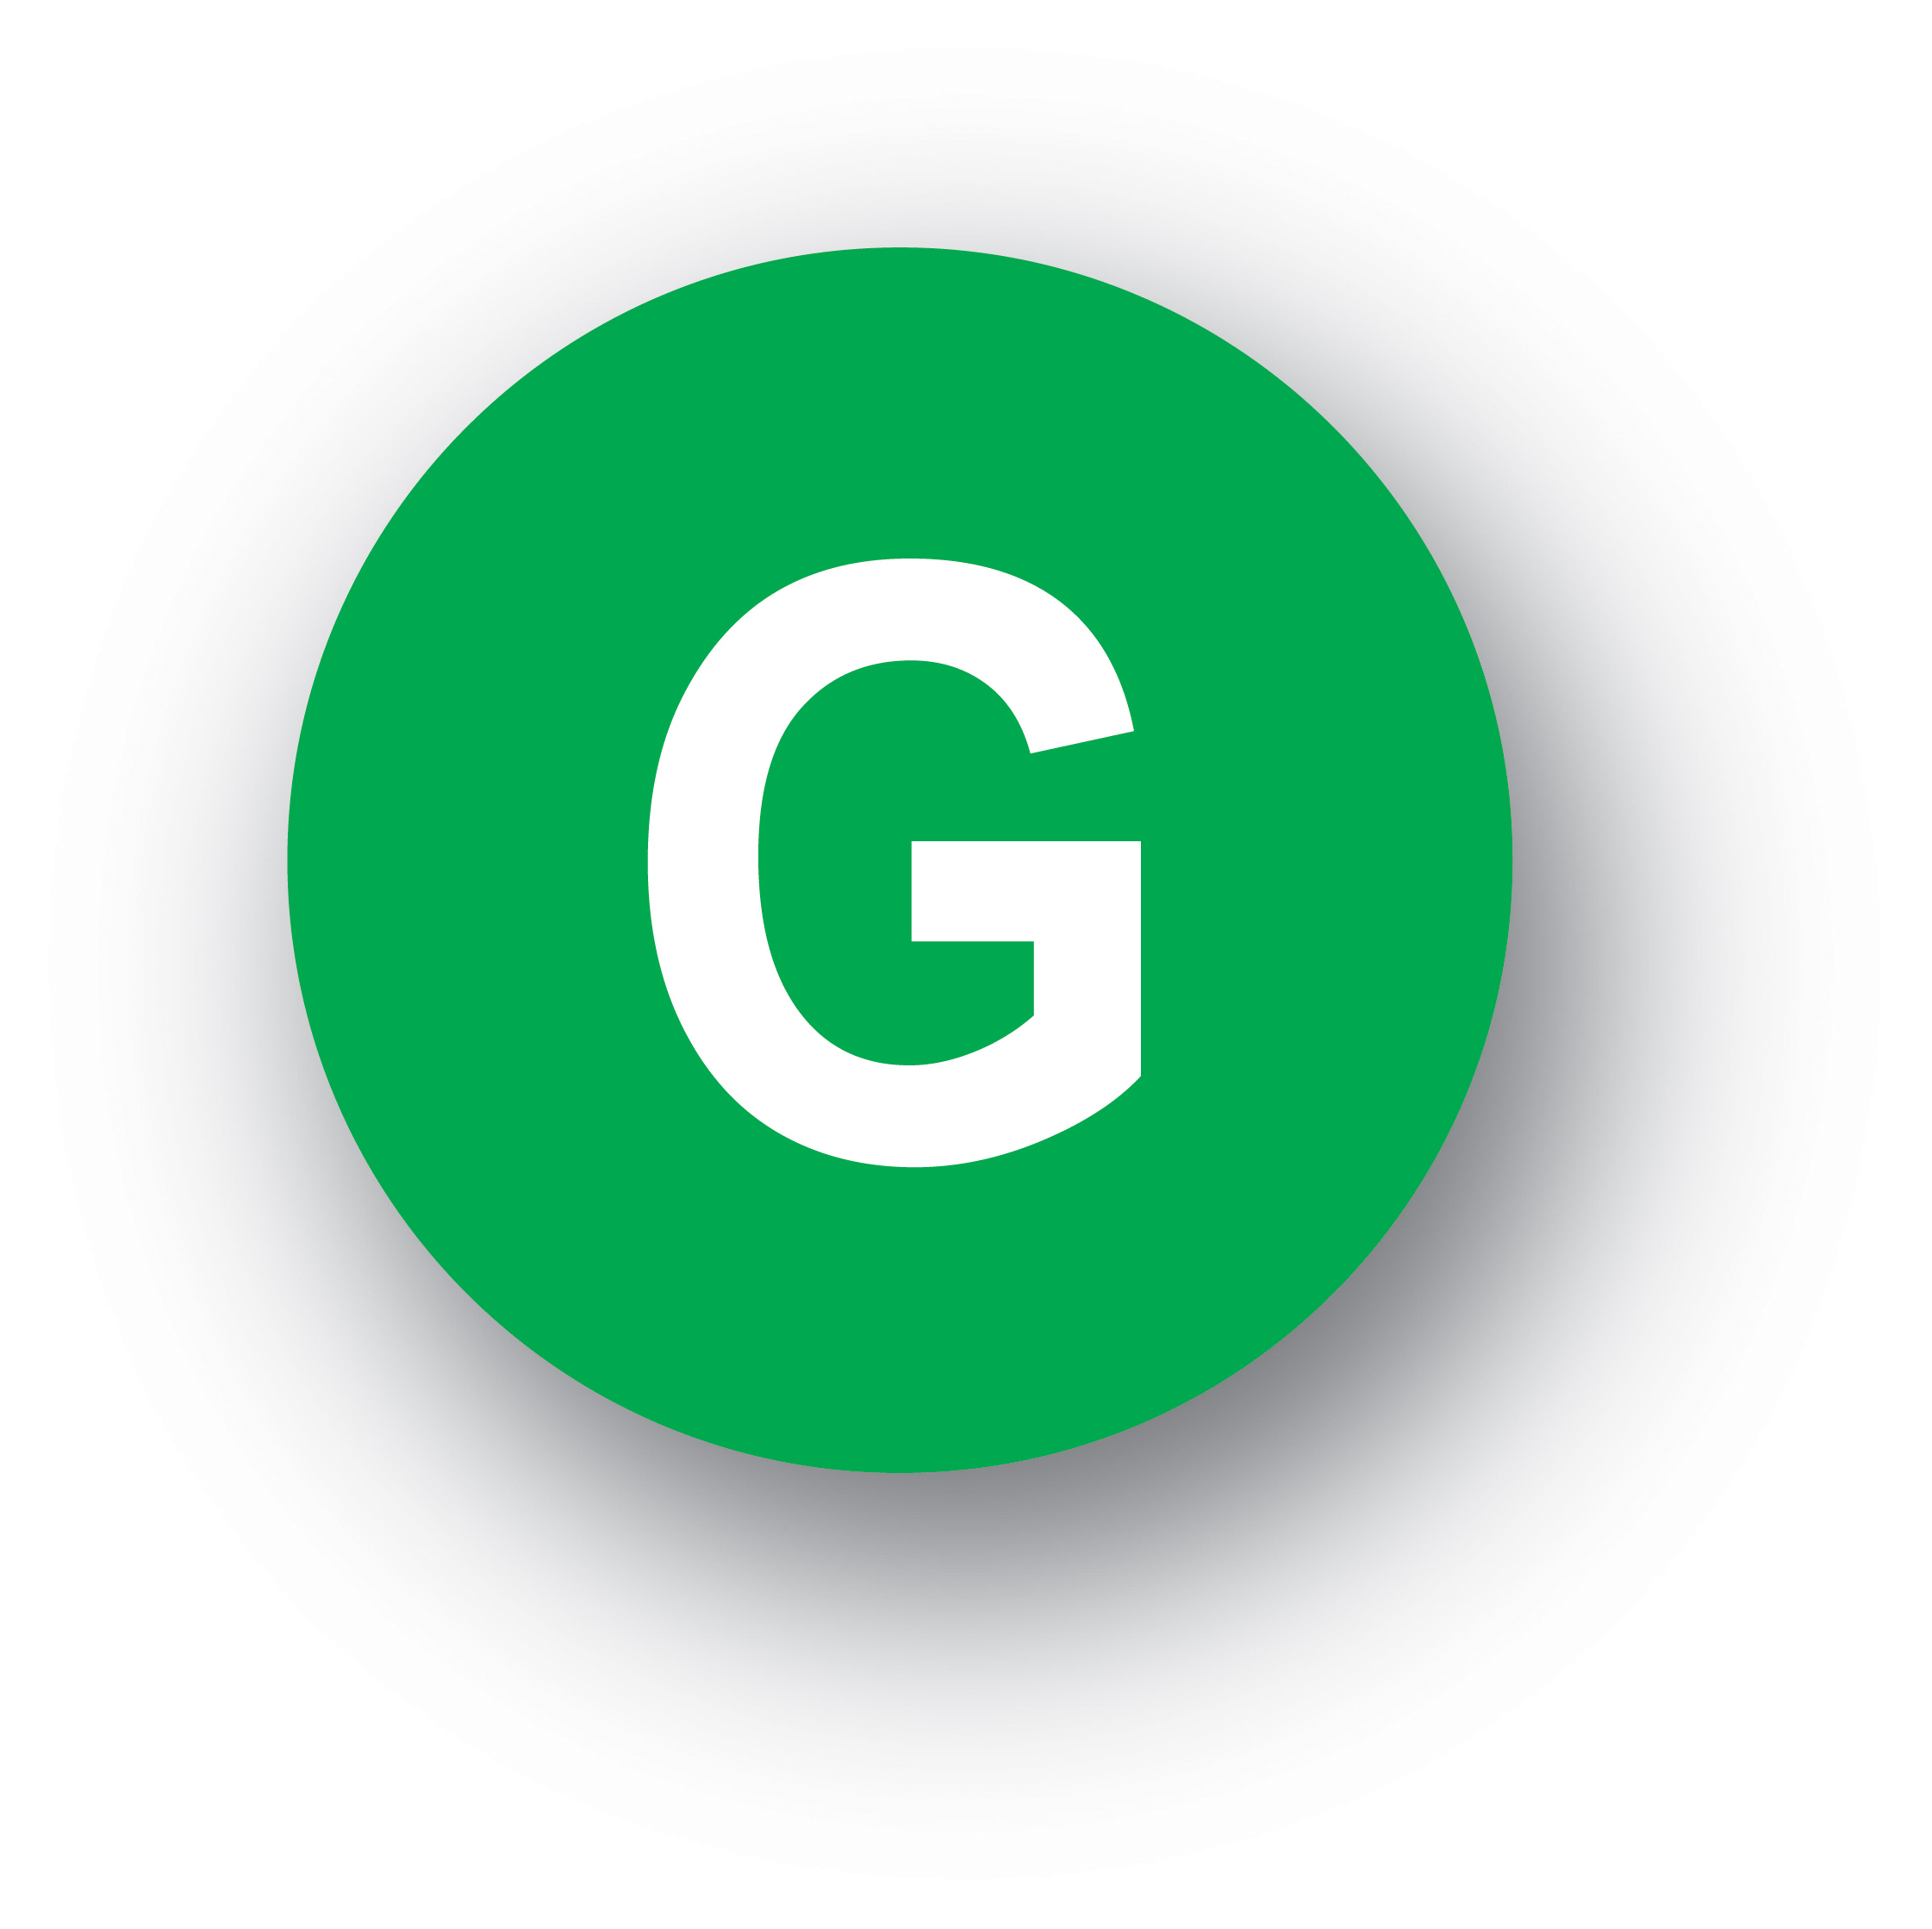 rated g symbol